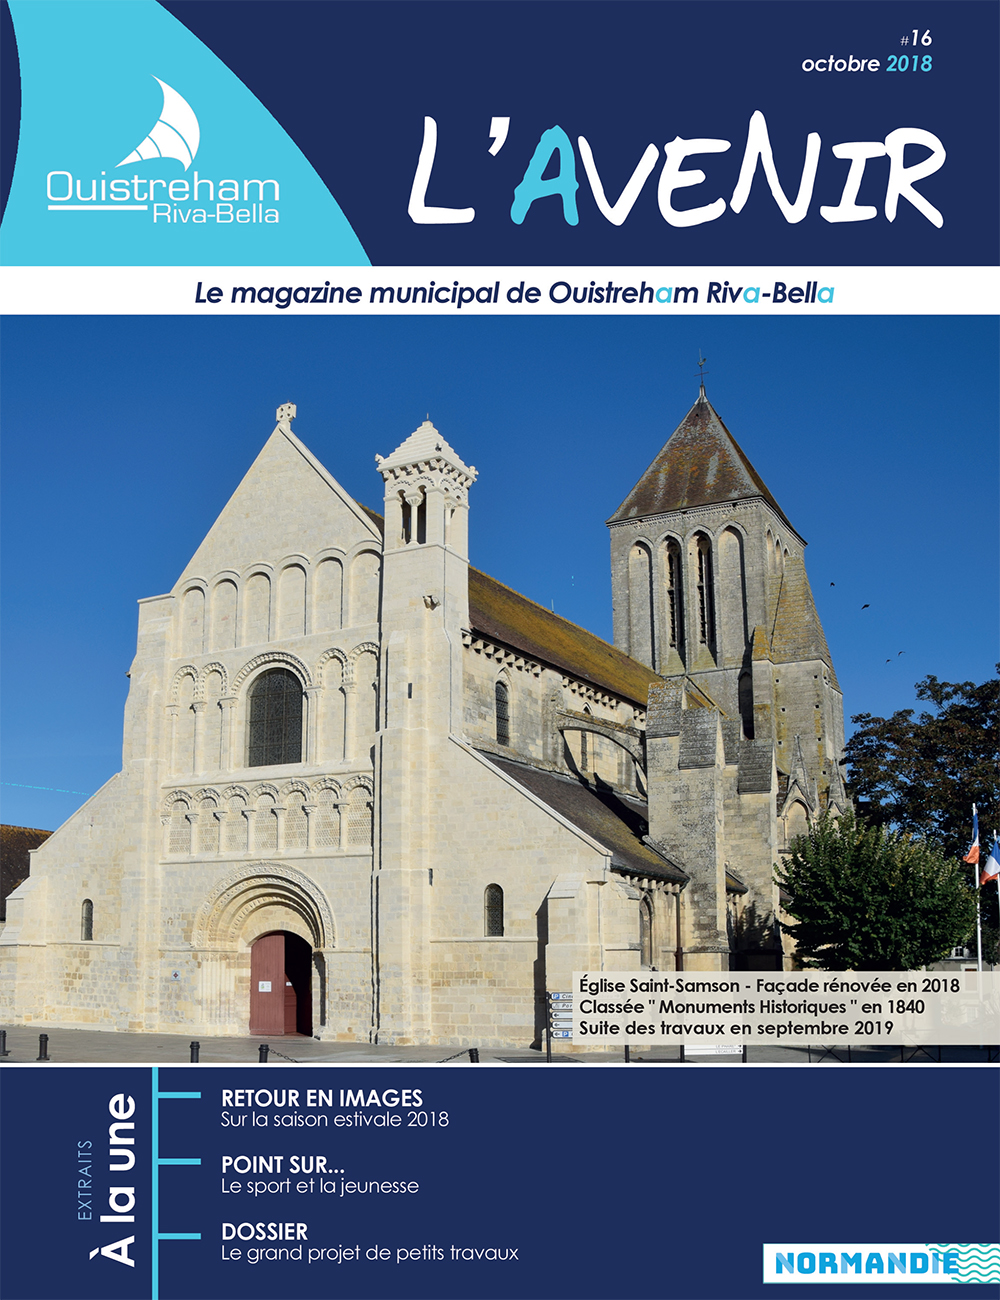 Magazine municipal - L'Avenir n°16 - Ouistreham Riva-Bella - octobre 2018